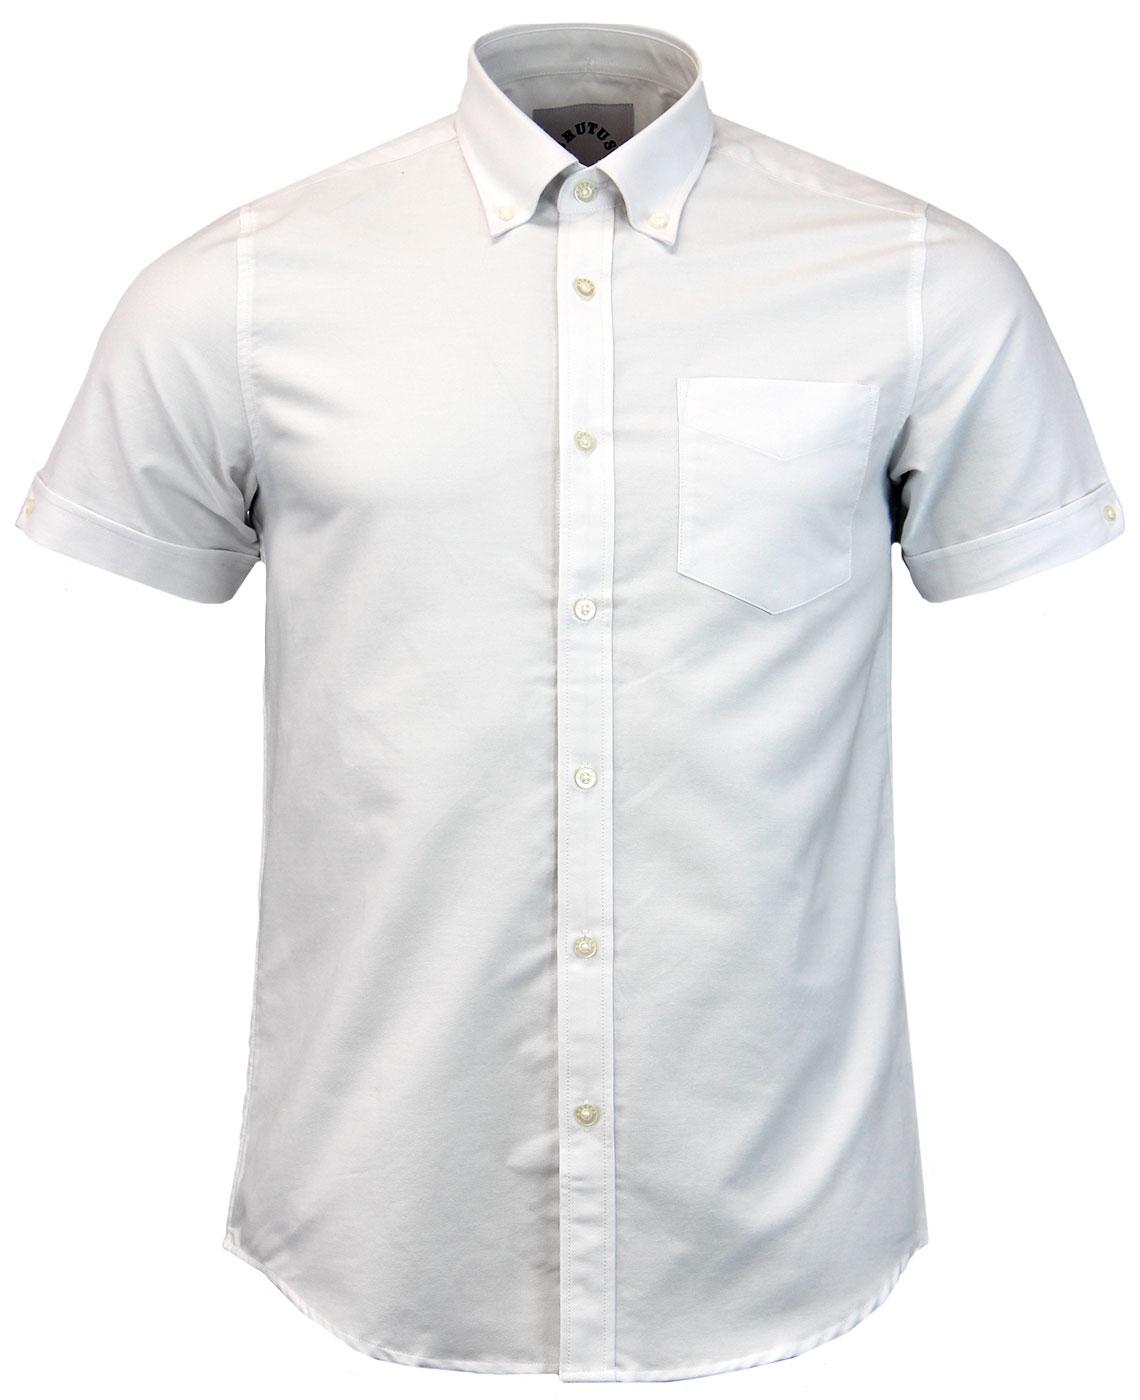 BRUTUS Retro Mod Button Down Oxford Shirt in White